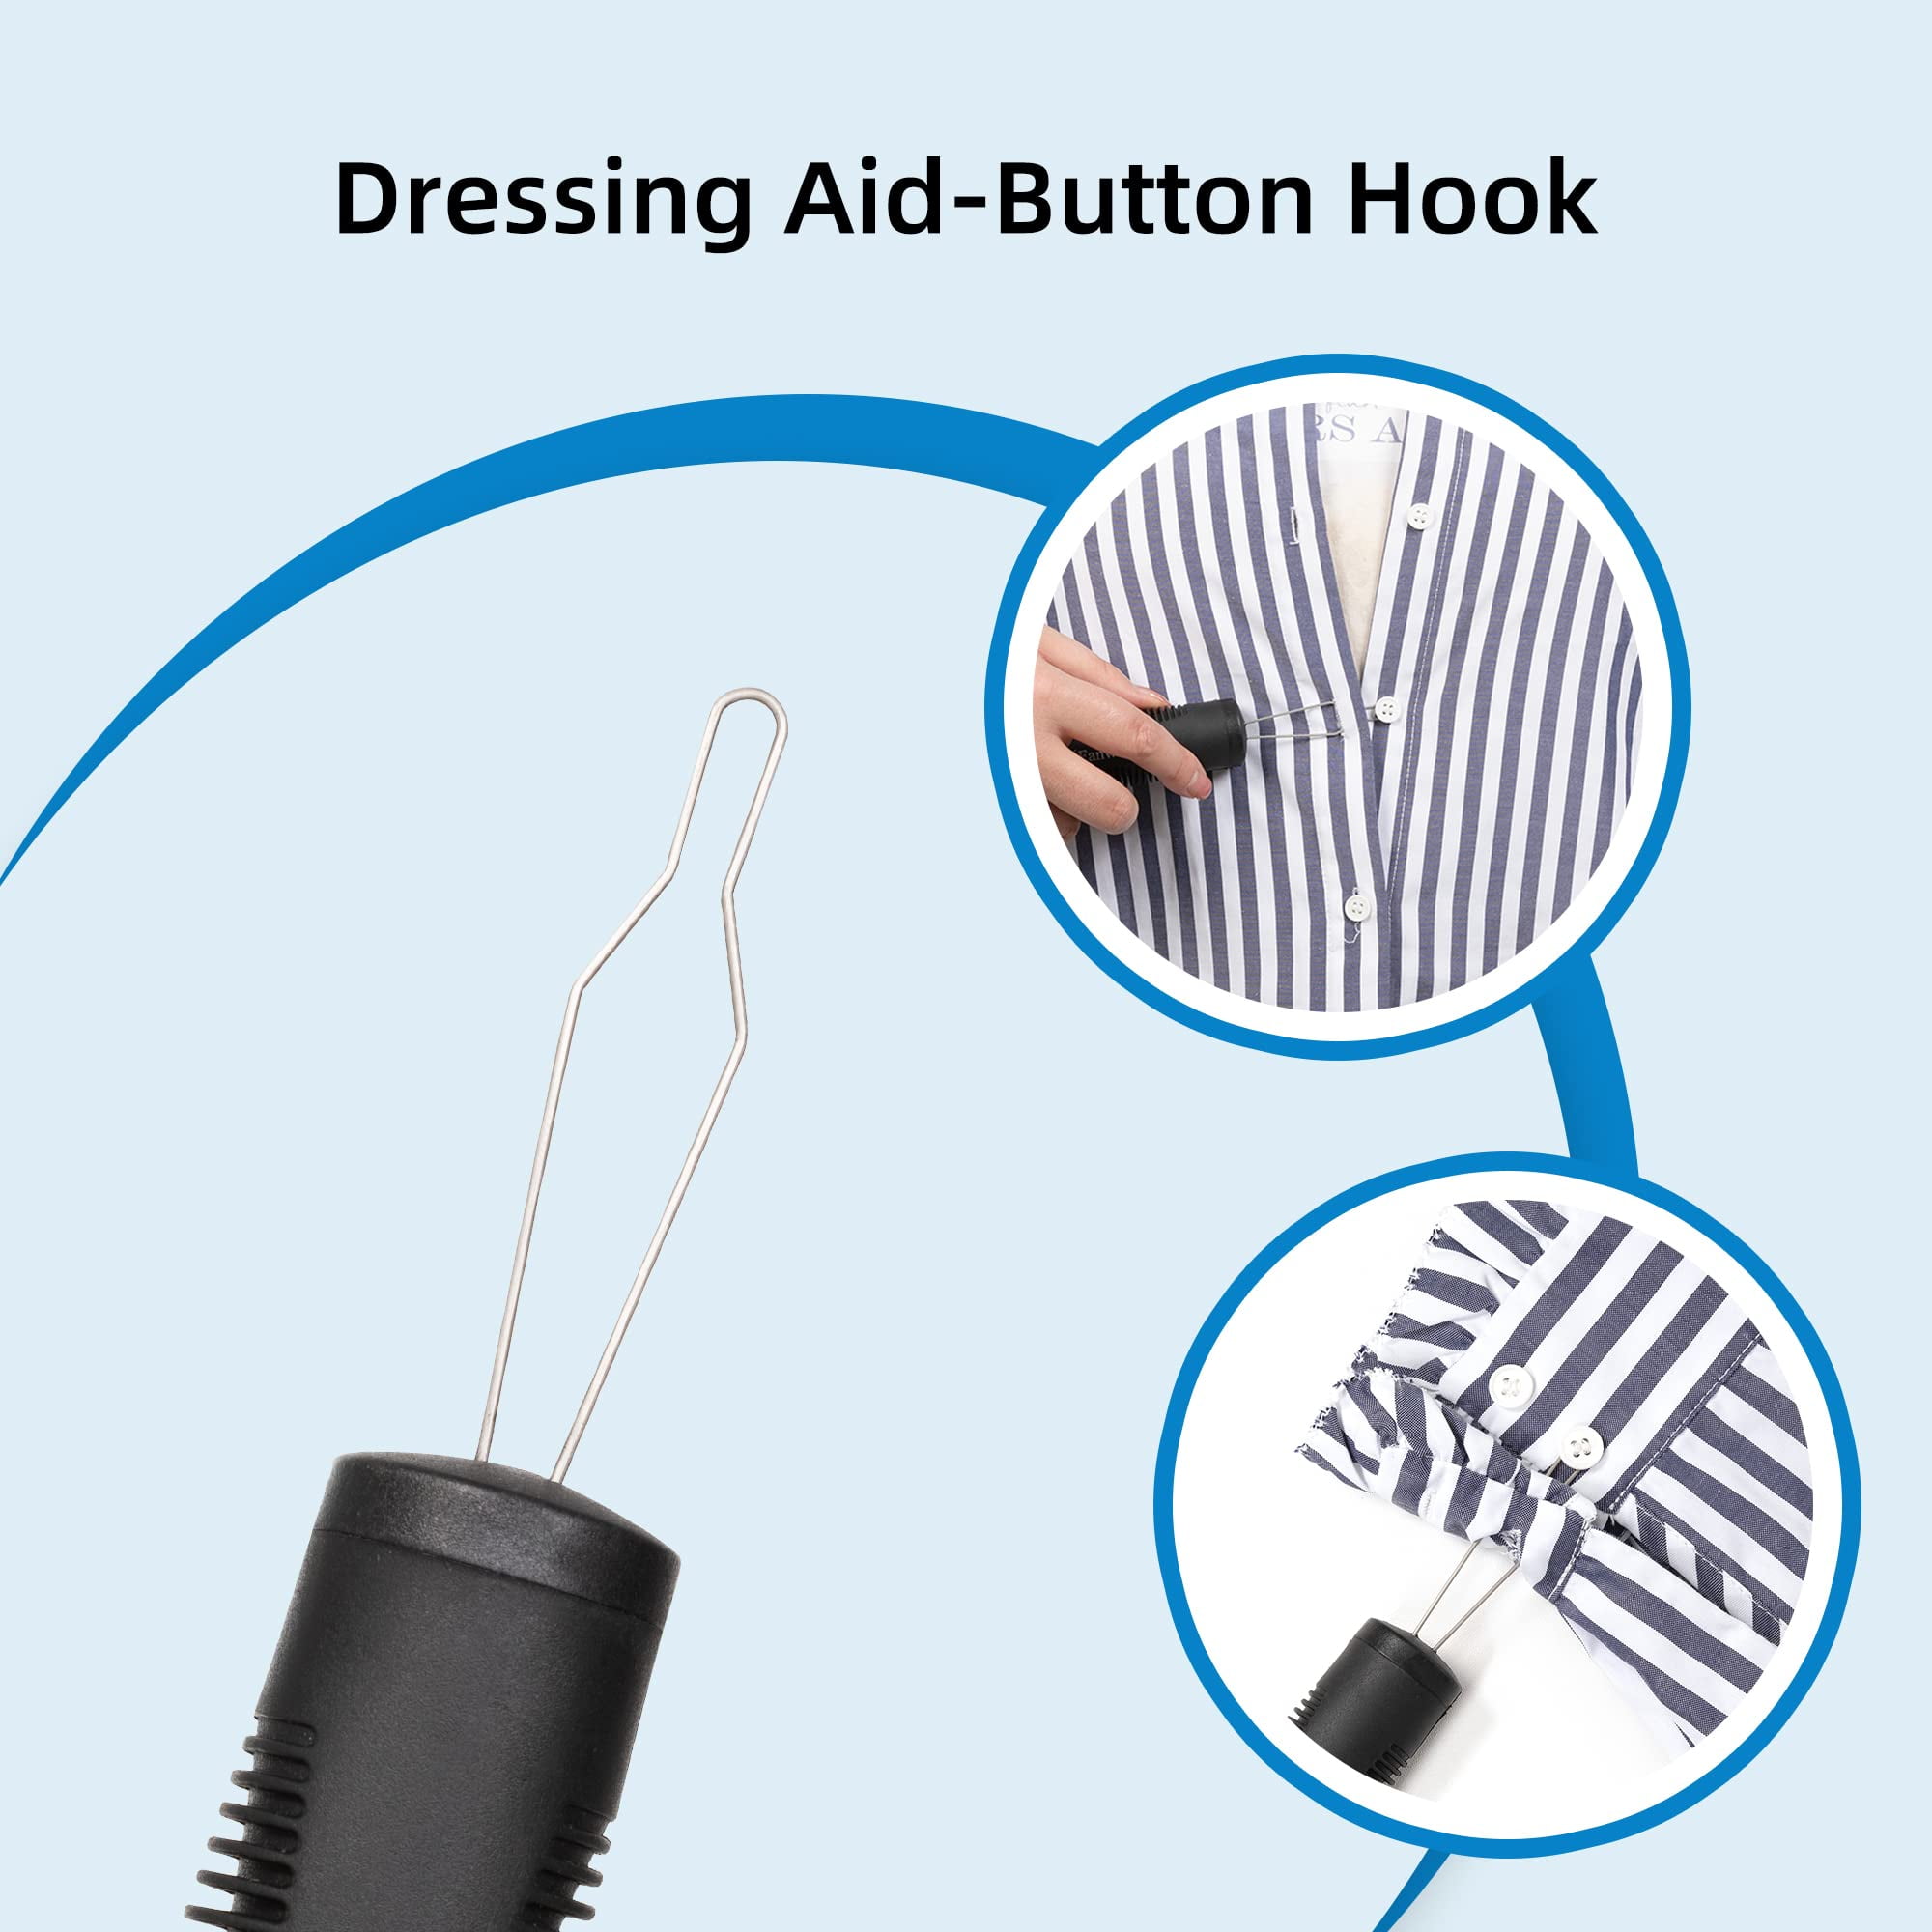 1/2X BUTTON HOOK Tool Dressing Aid Tools Zipper Helper For Arthritis W8G3  $5.68 - PicClick AU